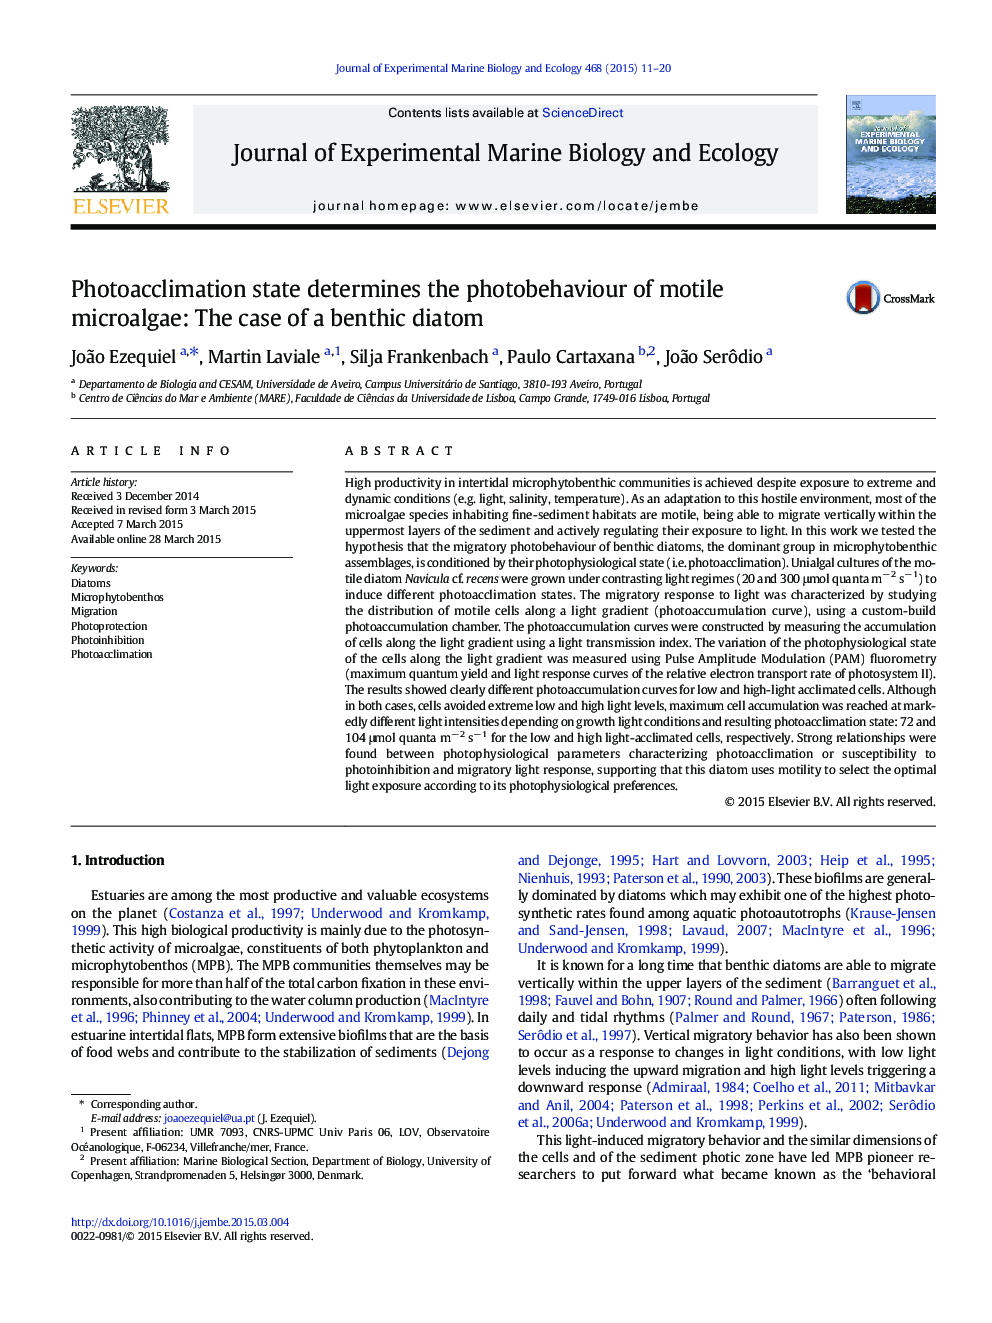 Photoacclimation state determines the photobehaviour of motile microalgae: The case of a benthic diatom